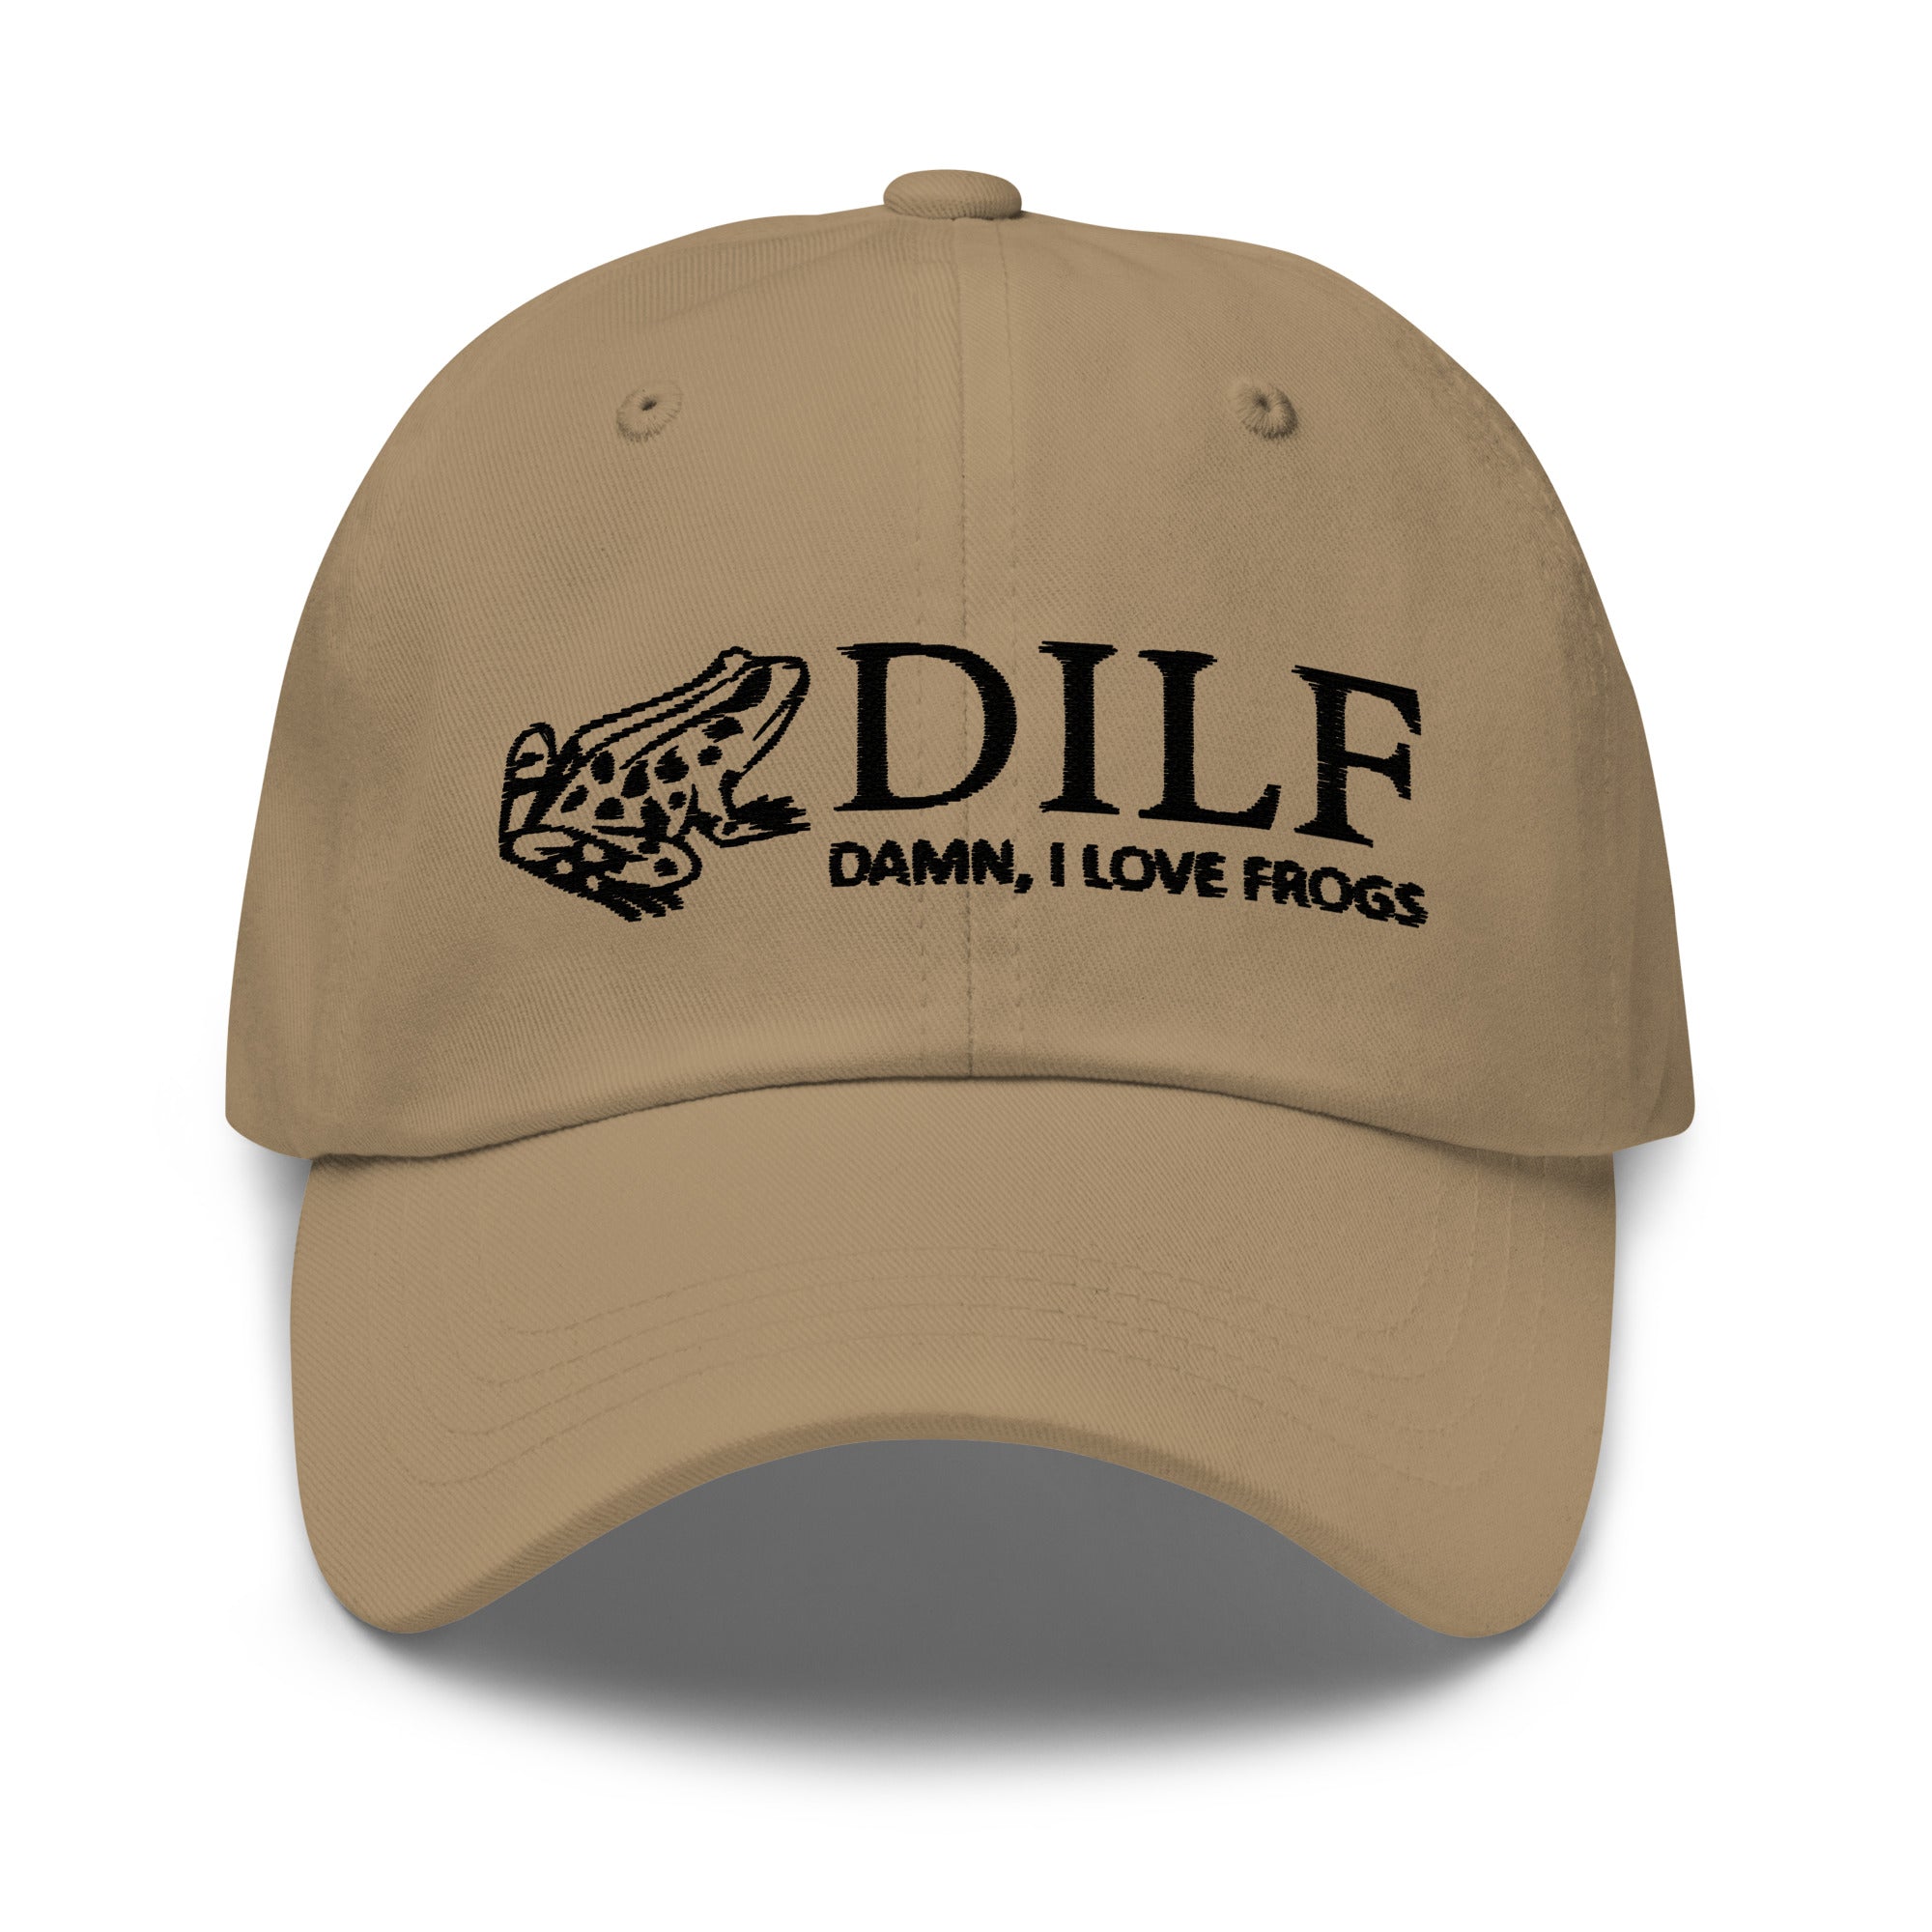 DILF (Damn, I Love Frogs) hat – Got Funny?